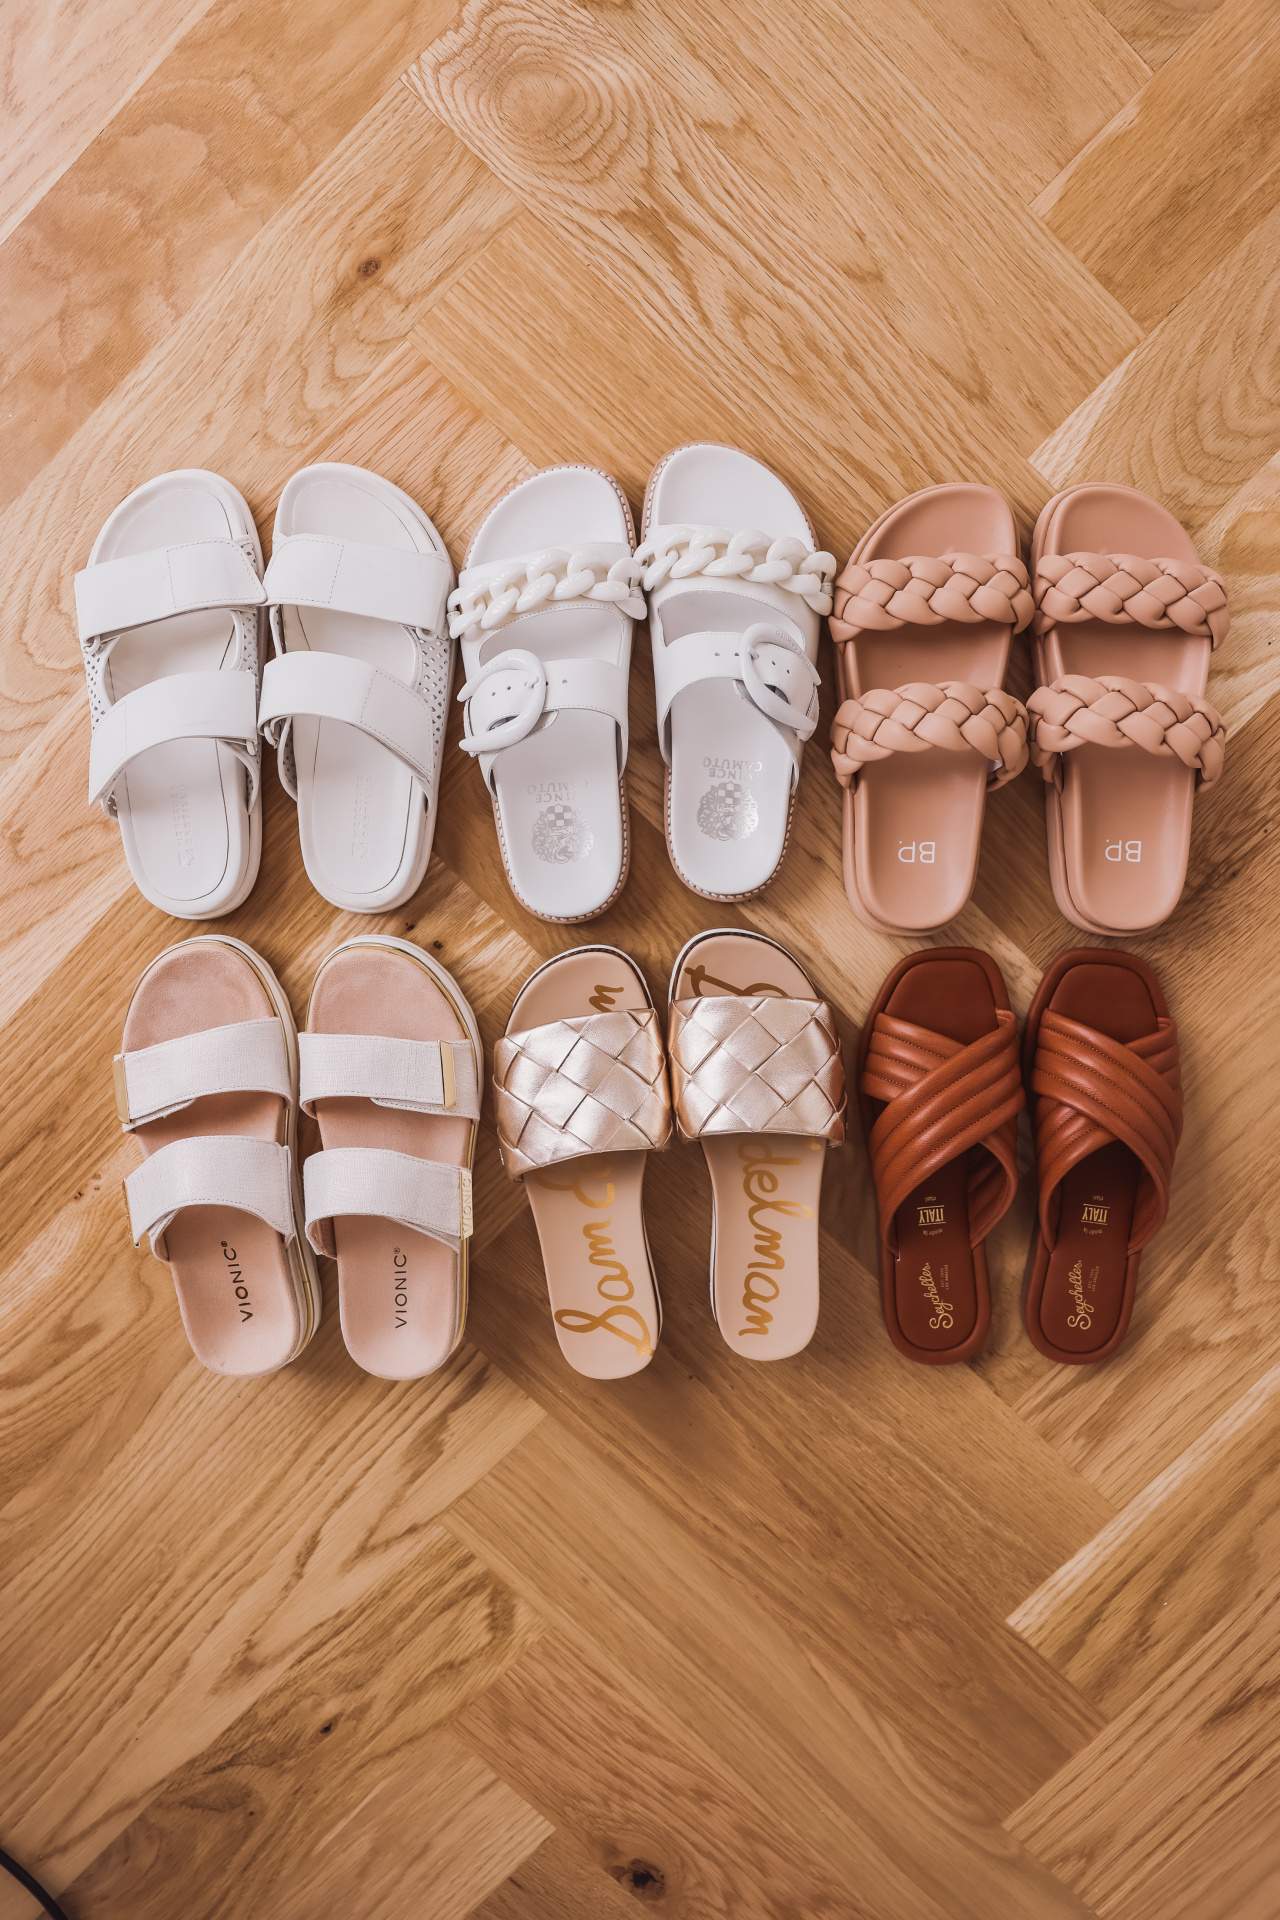 Underlegen Diktere Modish 7 Chic And Comfortable Slide-On Sandals For An Easy Breezy Summer!